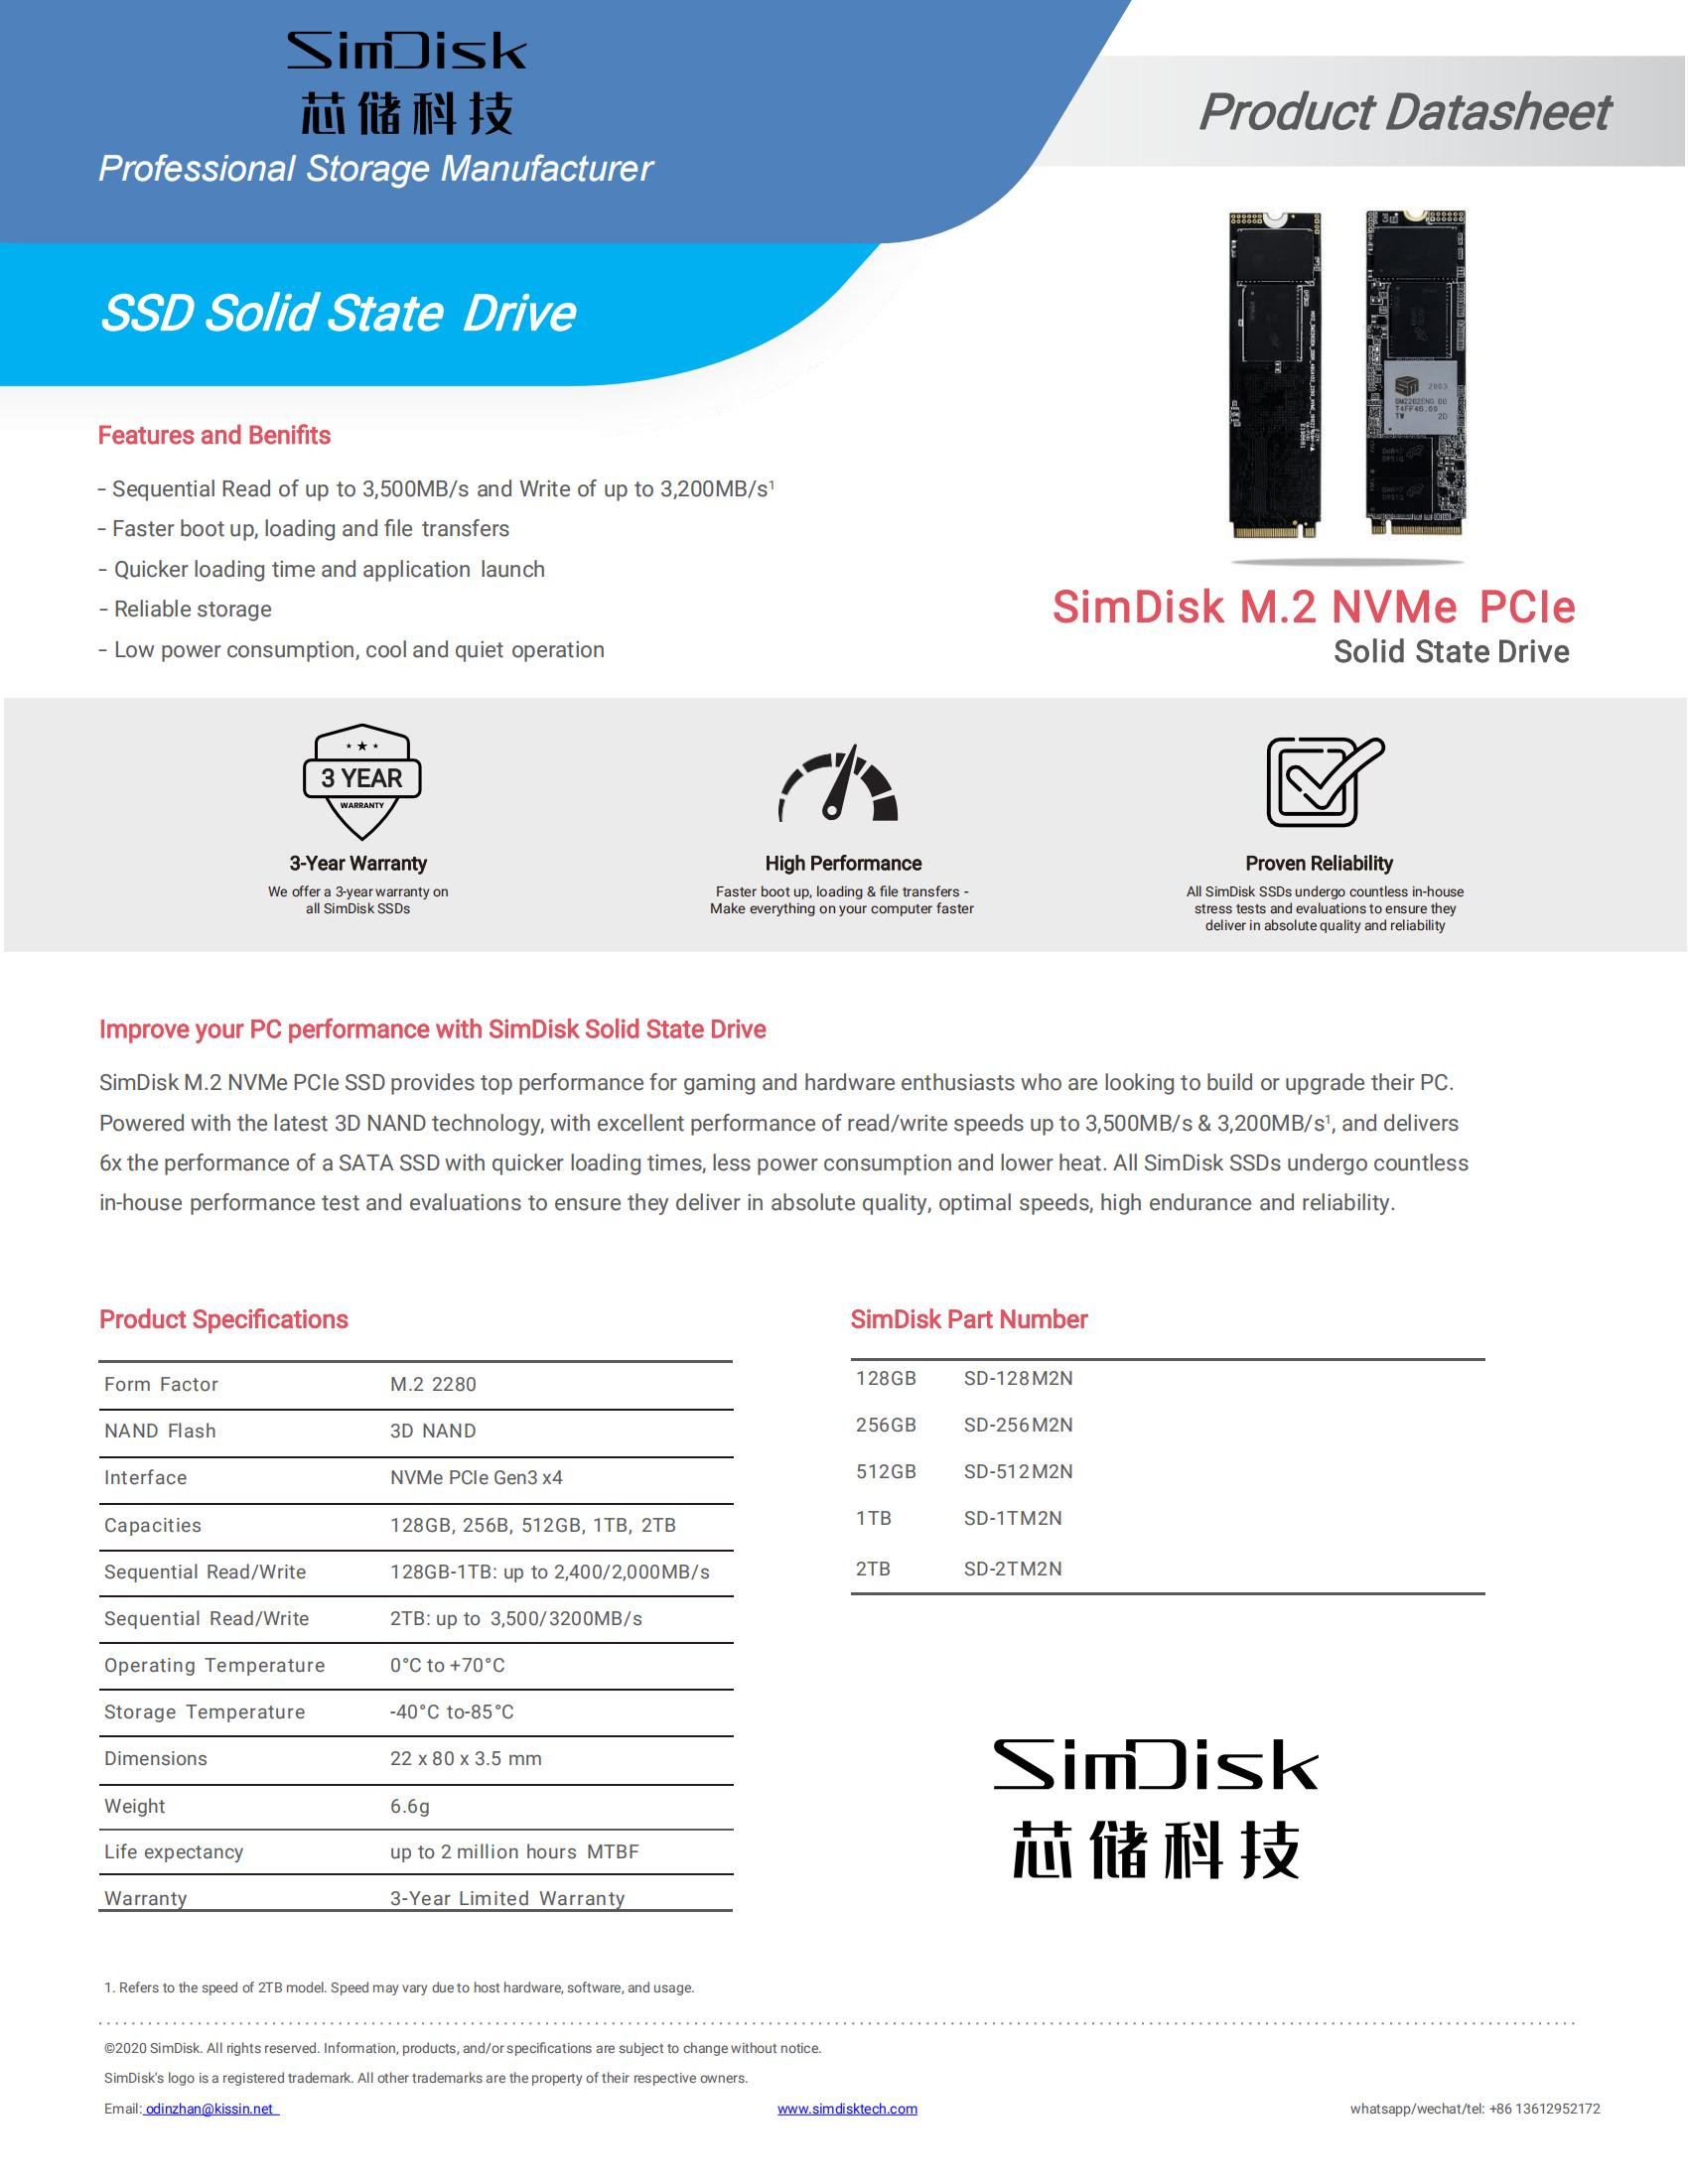 SimDisk M.2 NVME SSD Datasheet_00